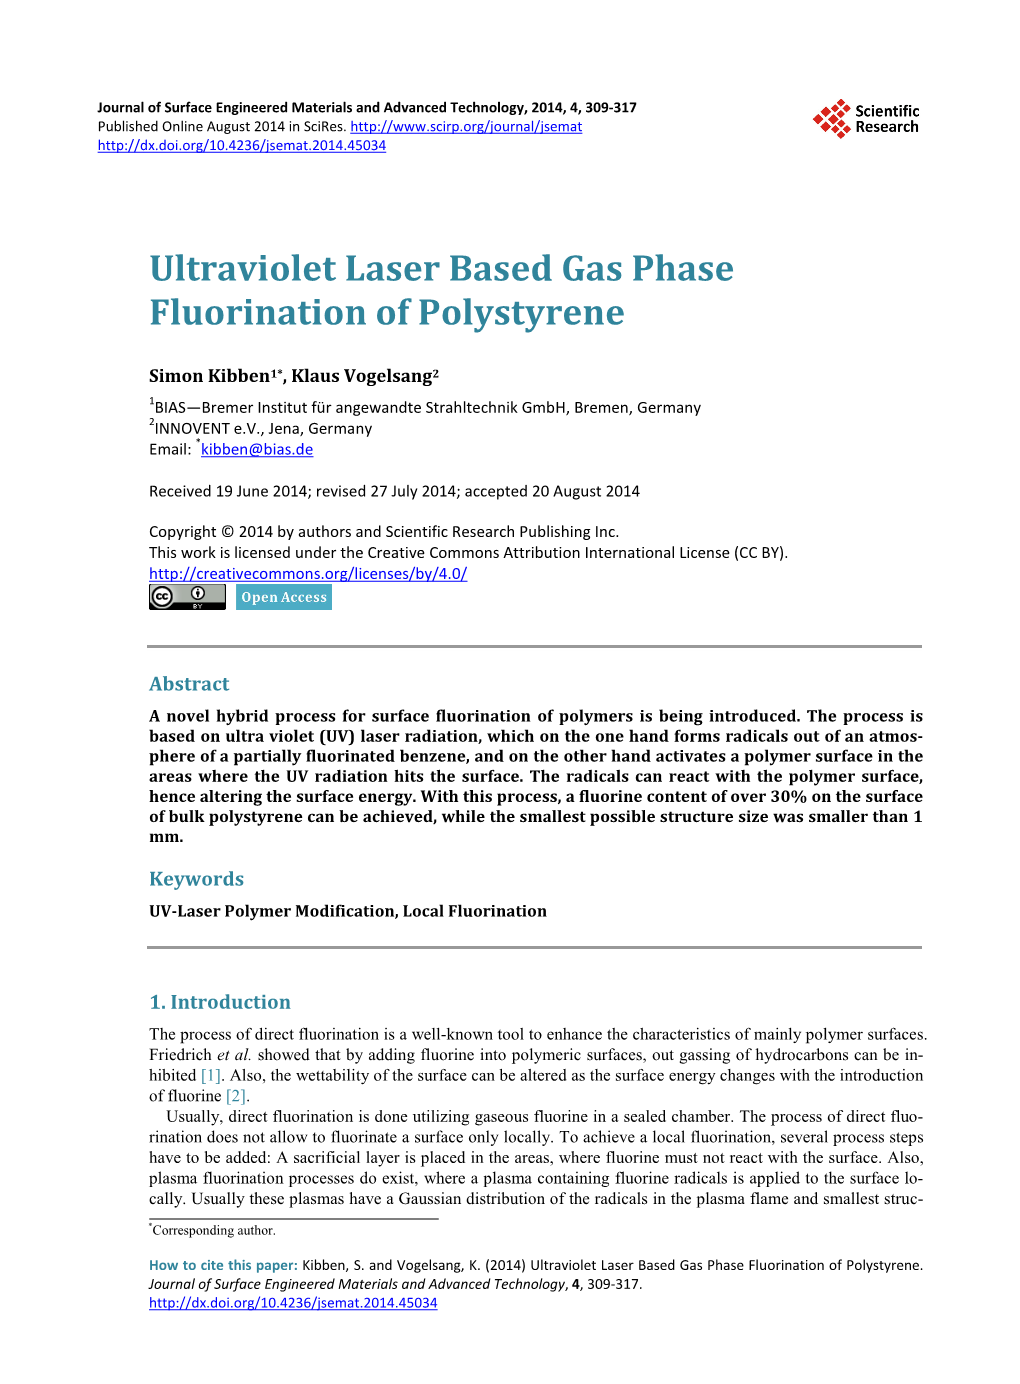 Ultraviolet Laser Based Gas Phase Fluorination of Polystyrene